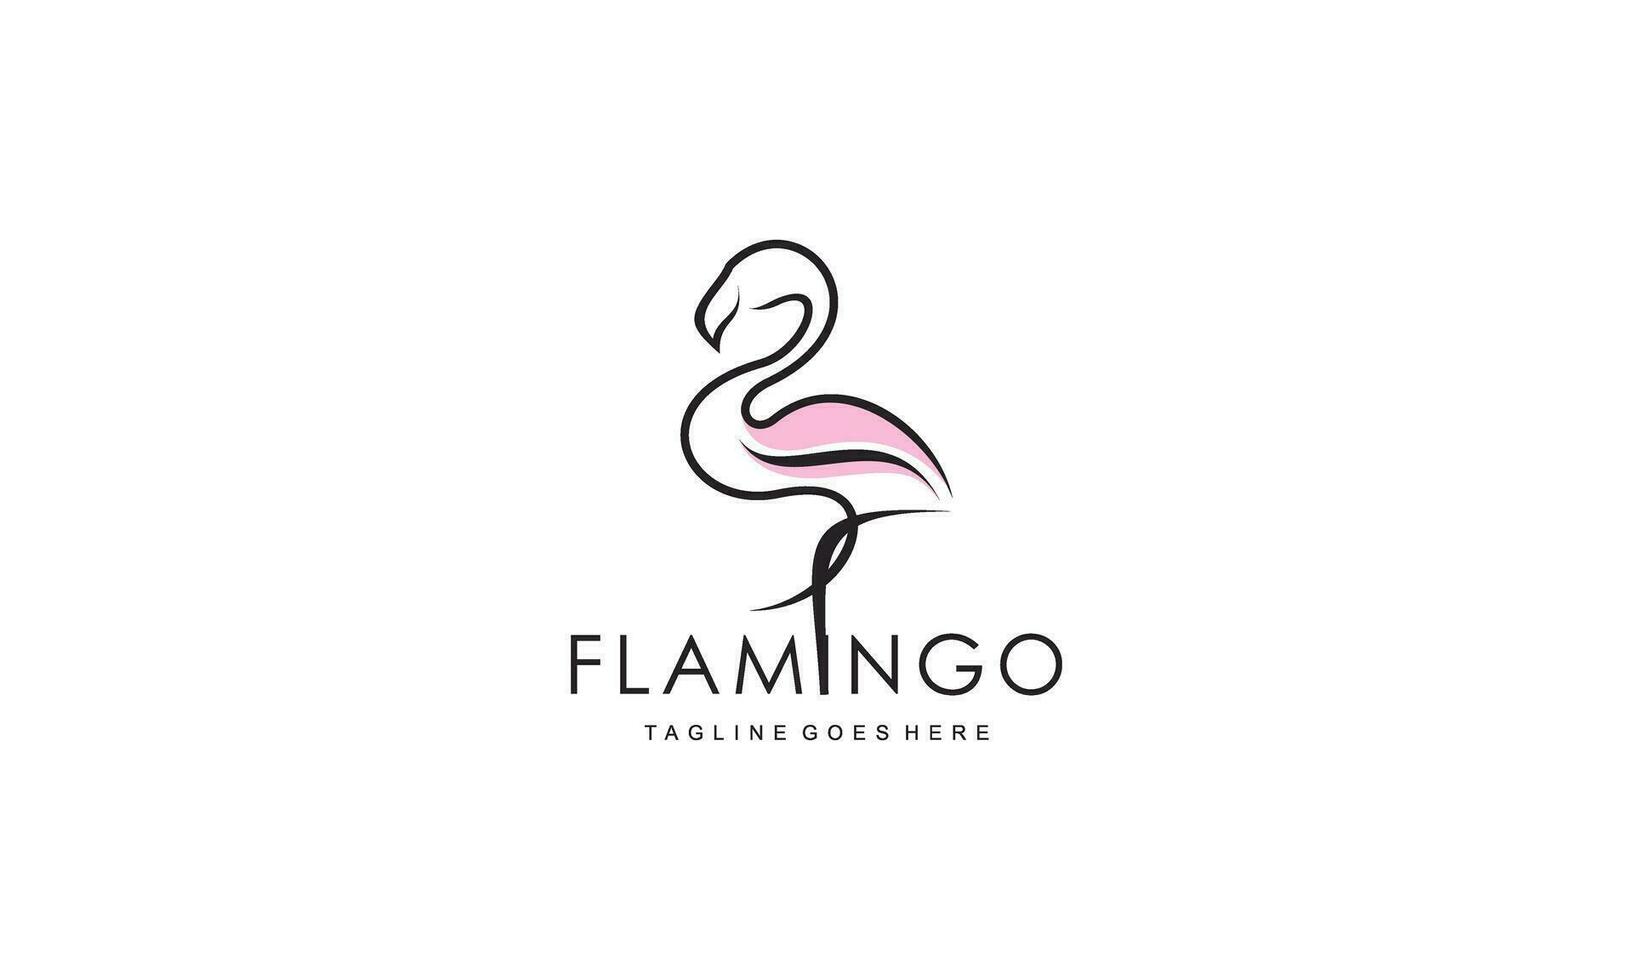 Flamingo logo concept design. Line art vector illustration